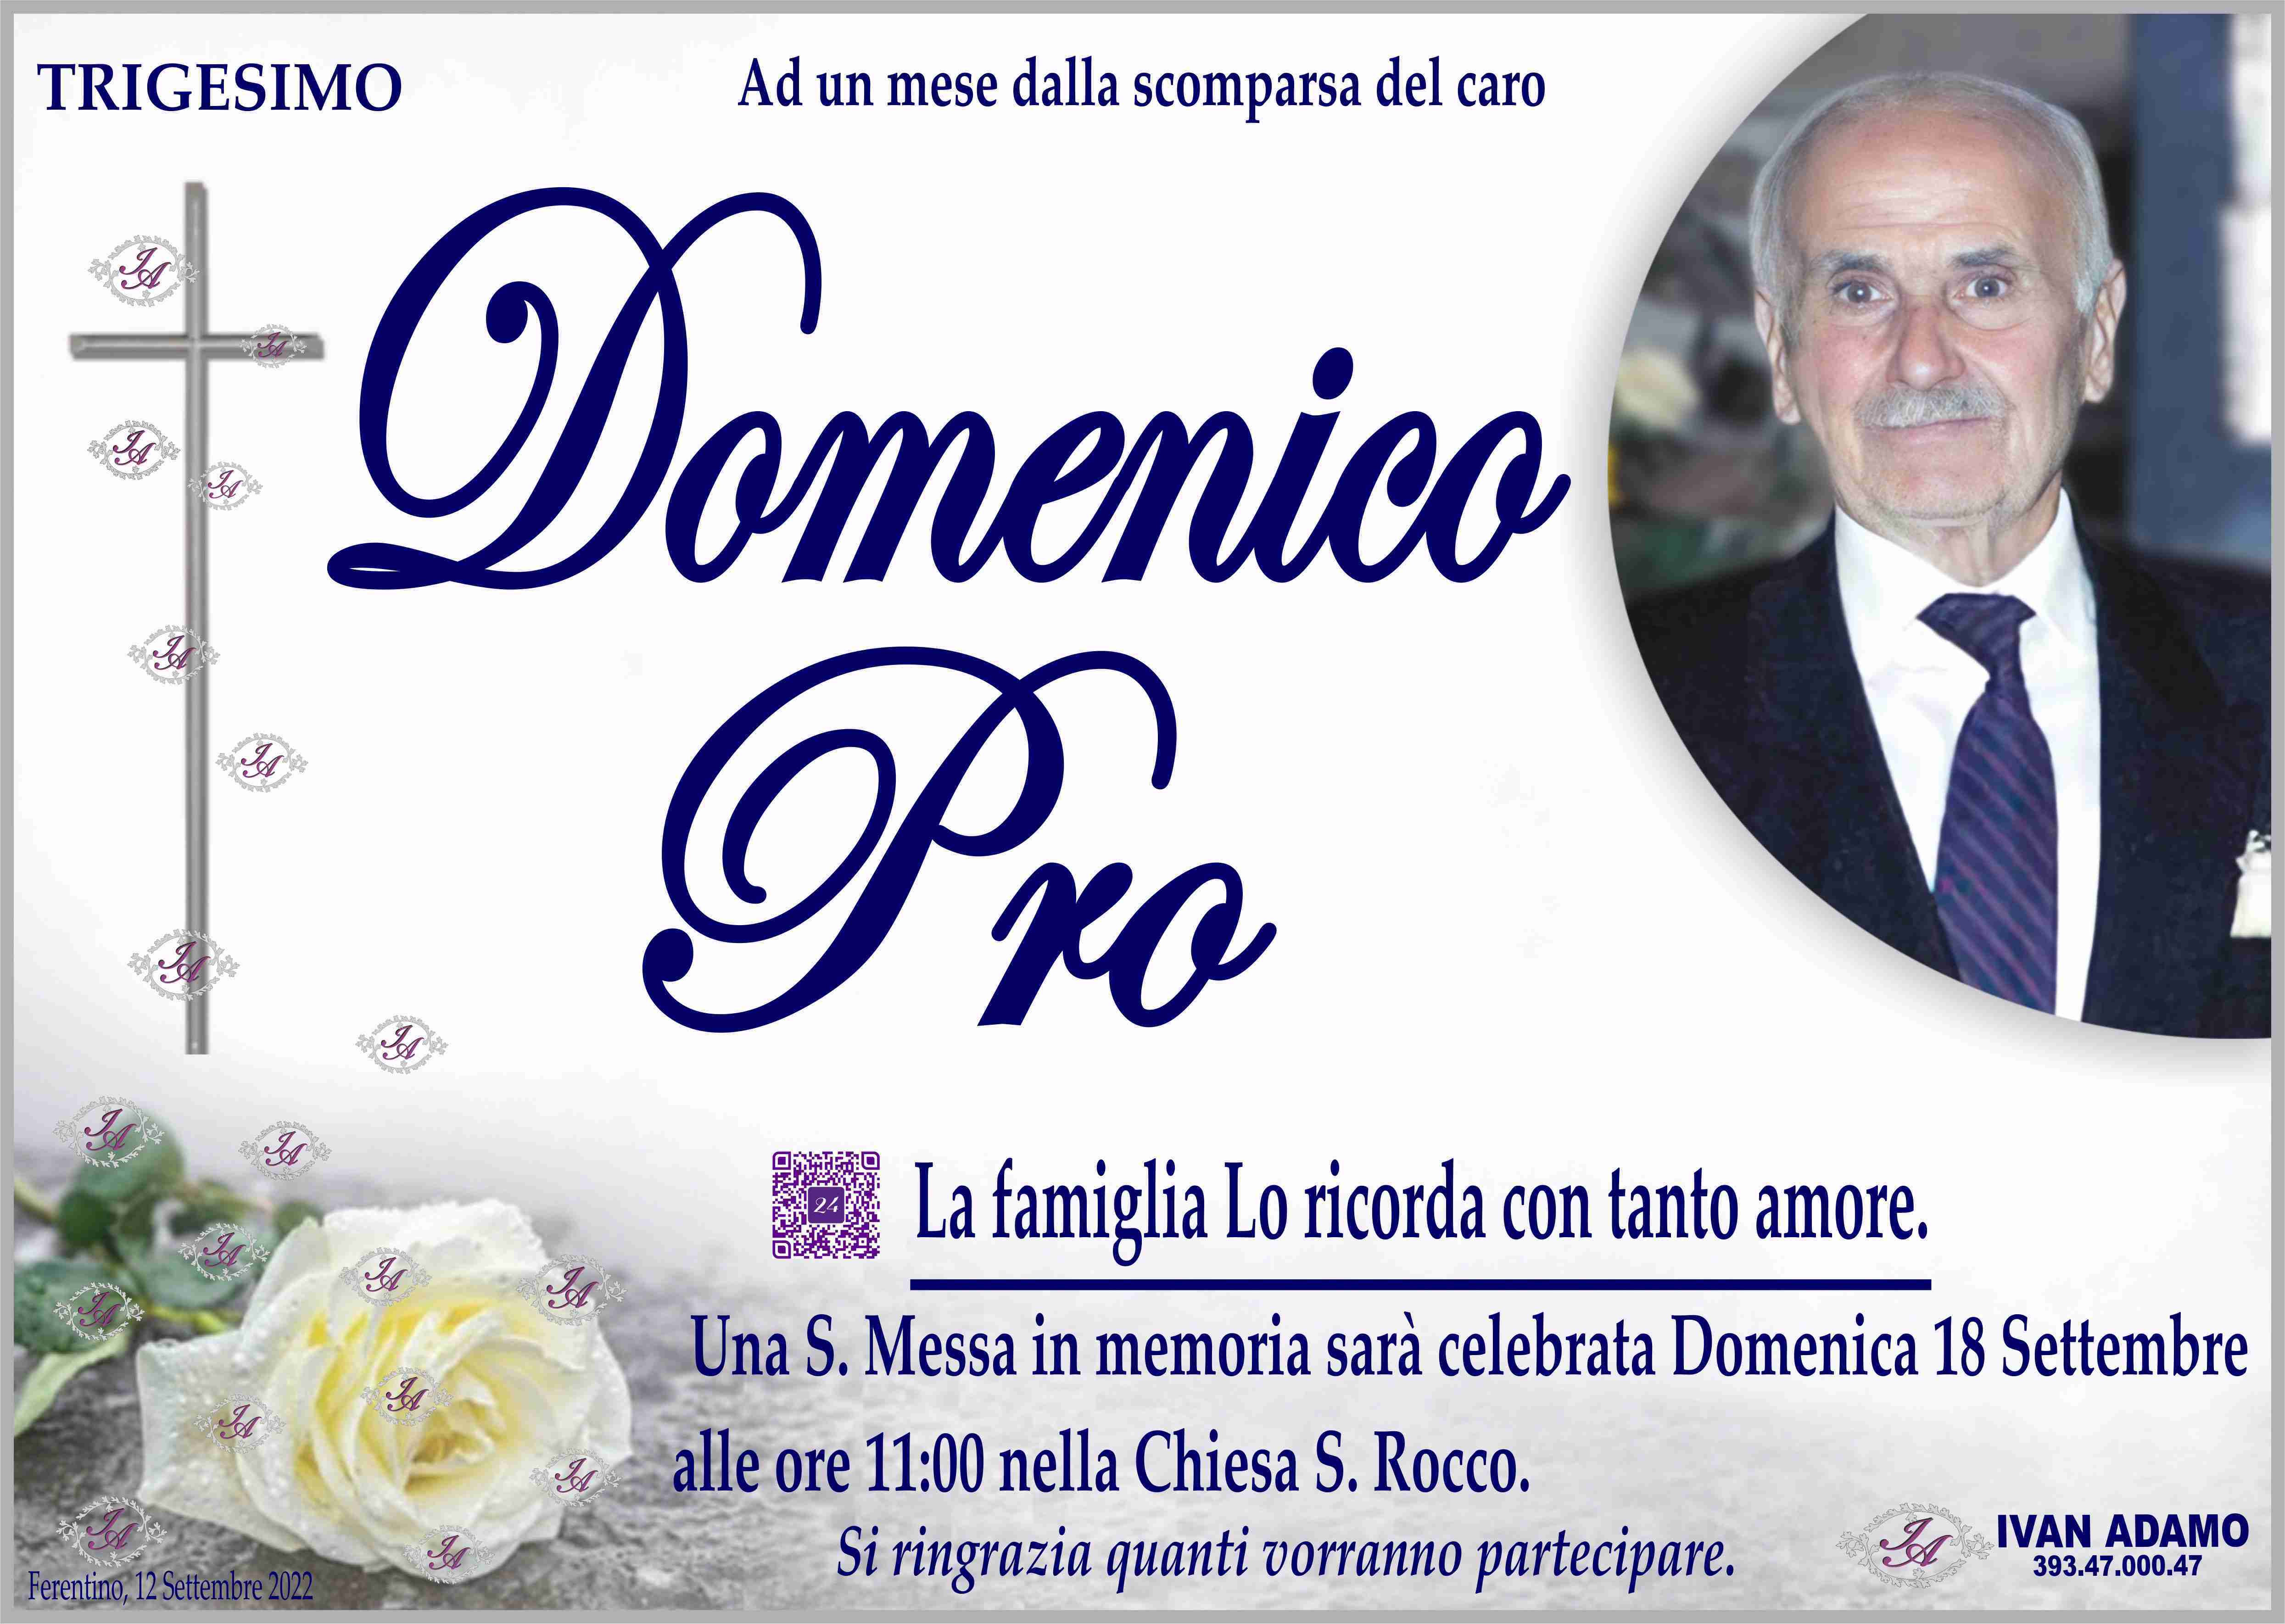 Domenico Pro